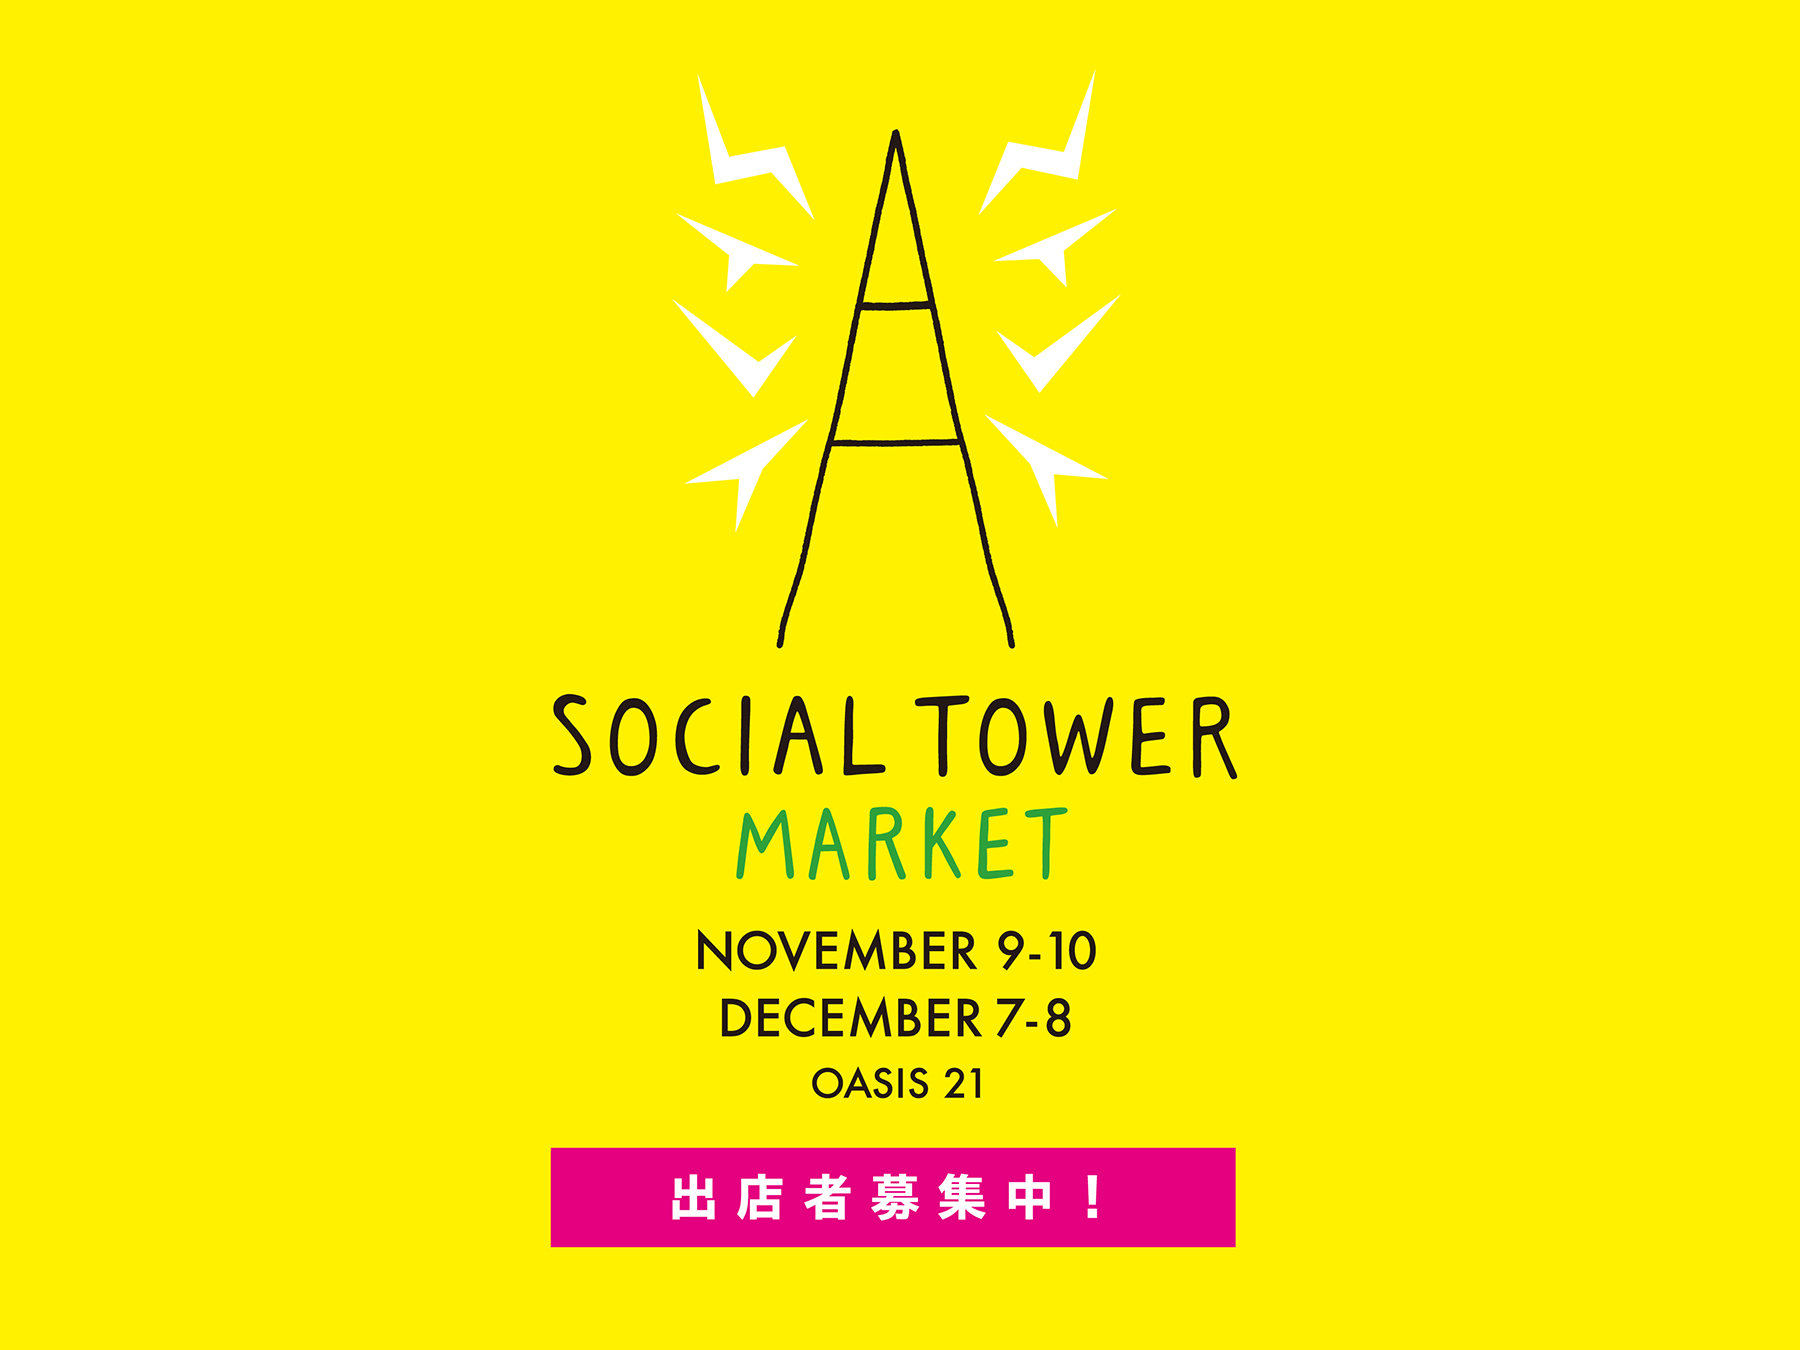 NEWS - SOCIAL TOWER MARKET - 名古屋の街に新しいかたちの社交場を